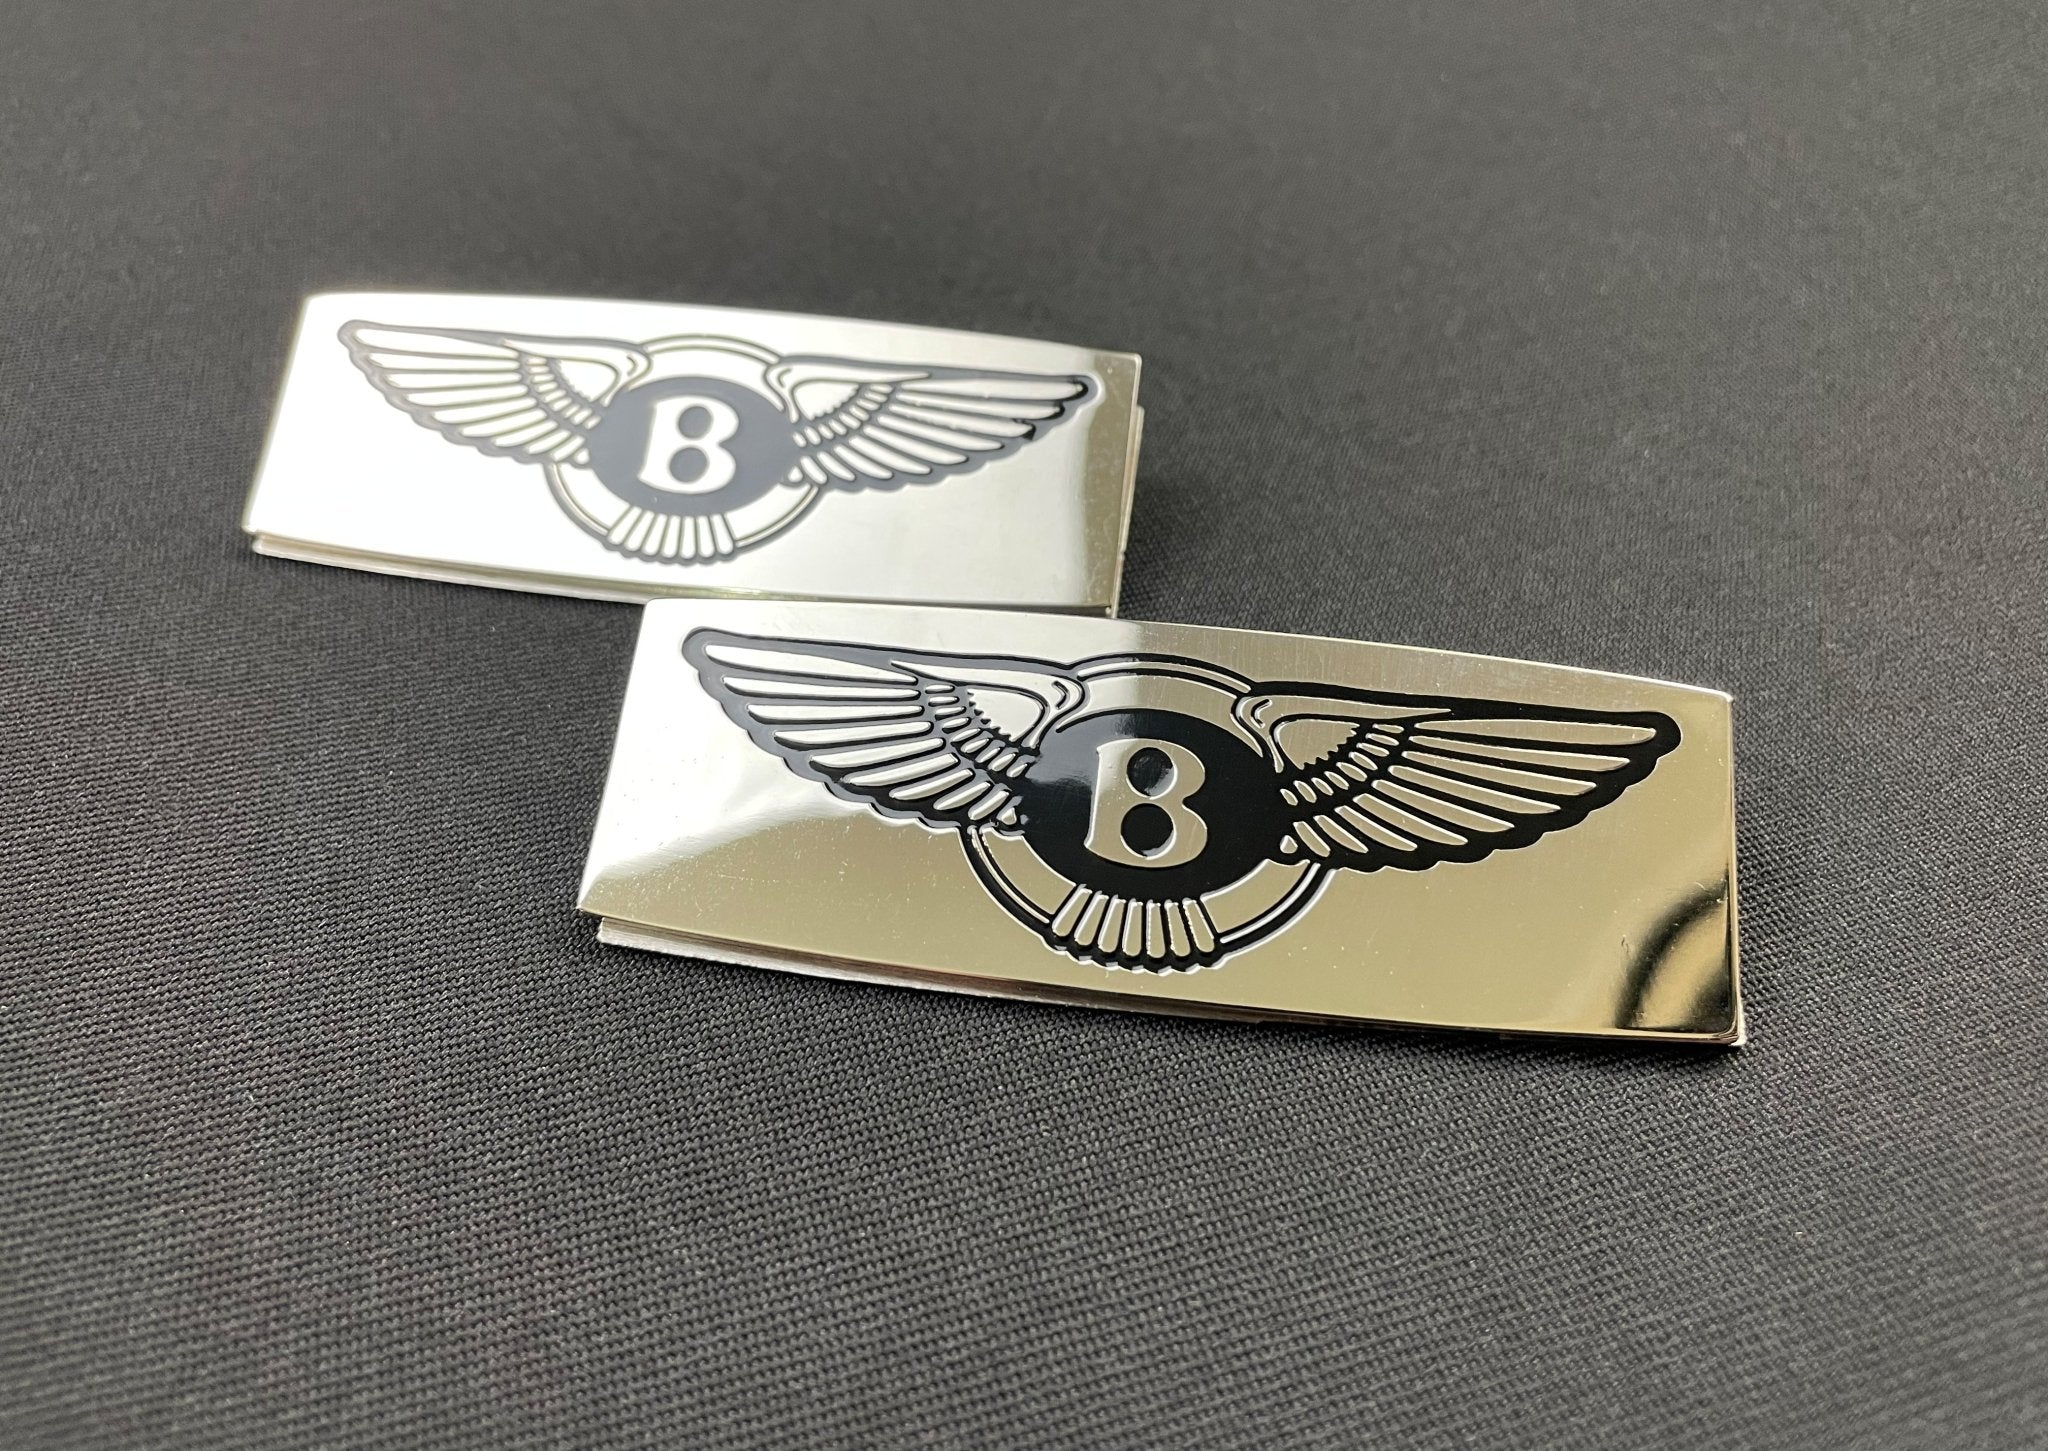 Bentley Any Model Metal Chrome Glossy Floor mats Badges Emblems Logo 2 pcs